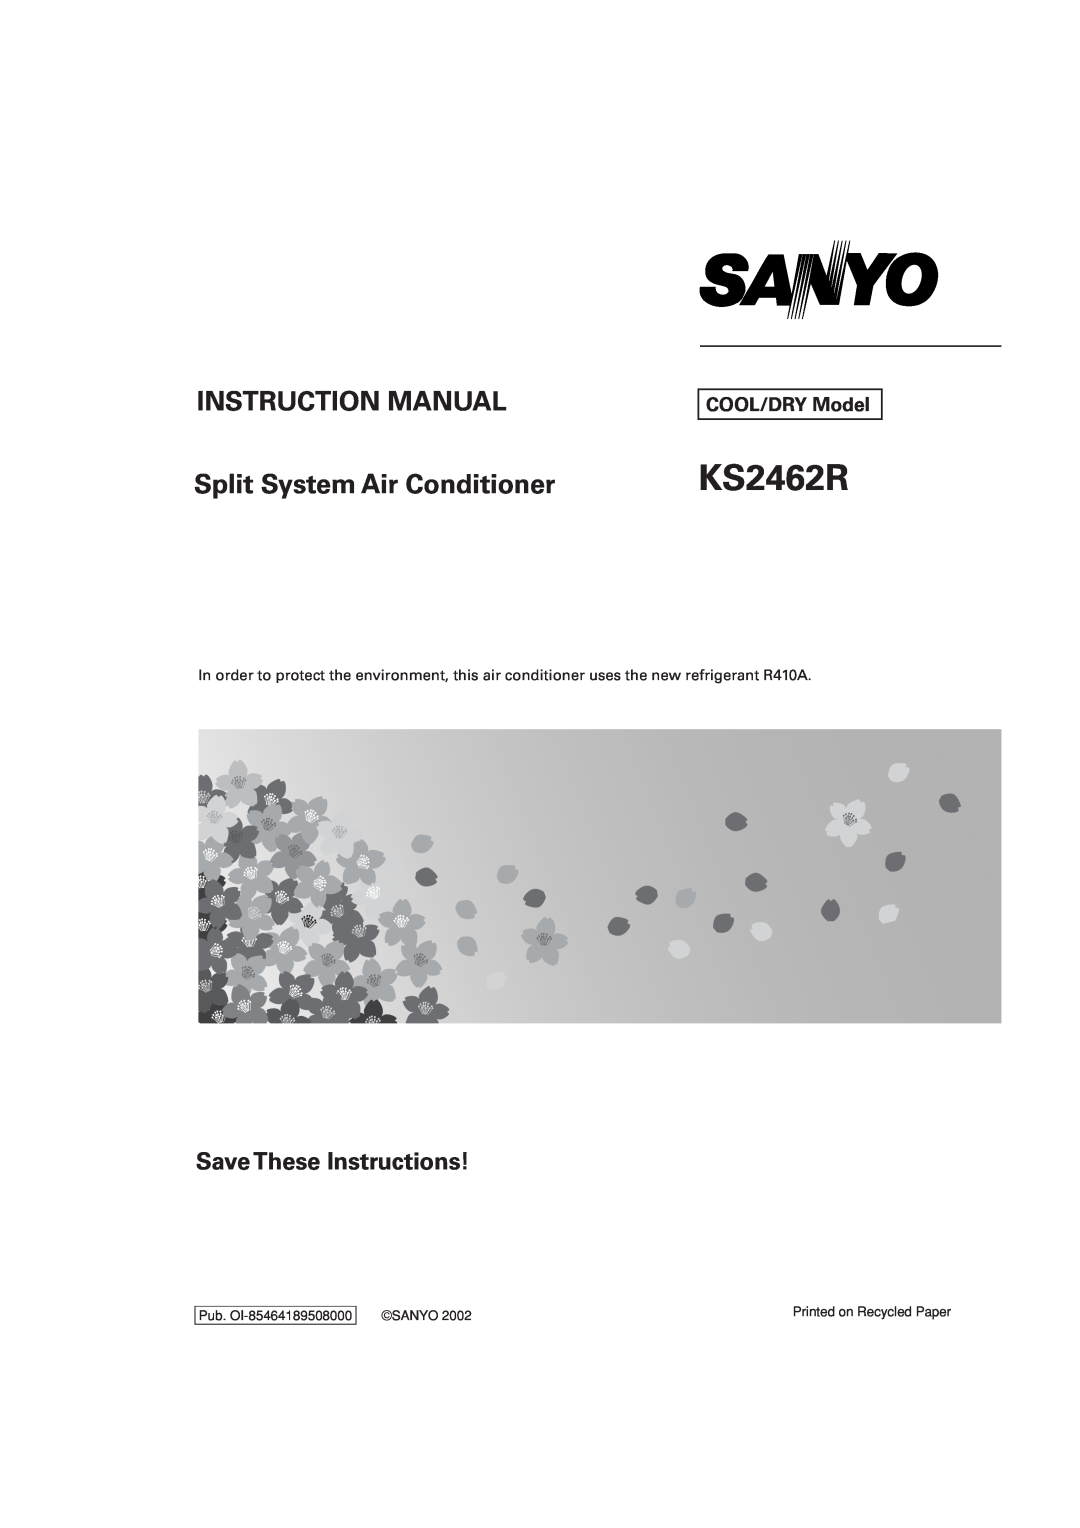 Sanyo KS2462R instruction manual Save These Instructions, COOL/DRY Model, Pub. OI-85464189508000, Sanyo 